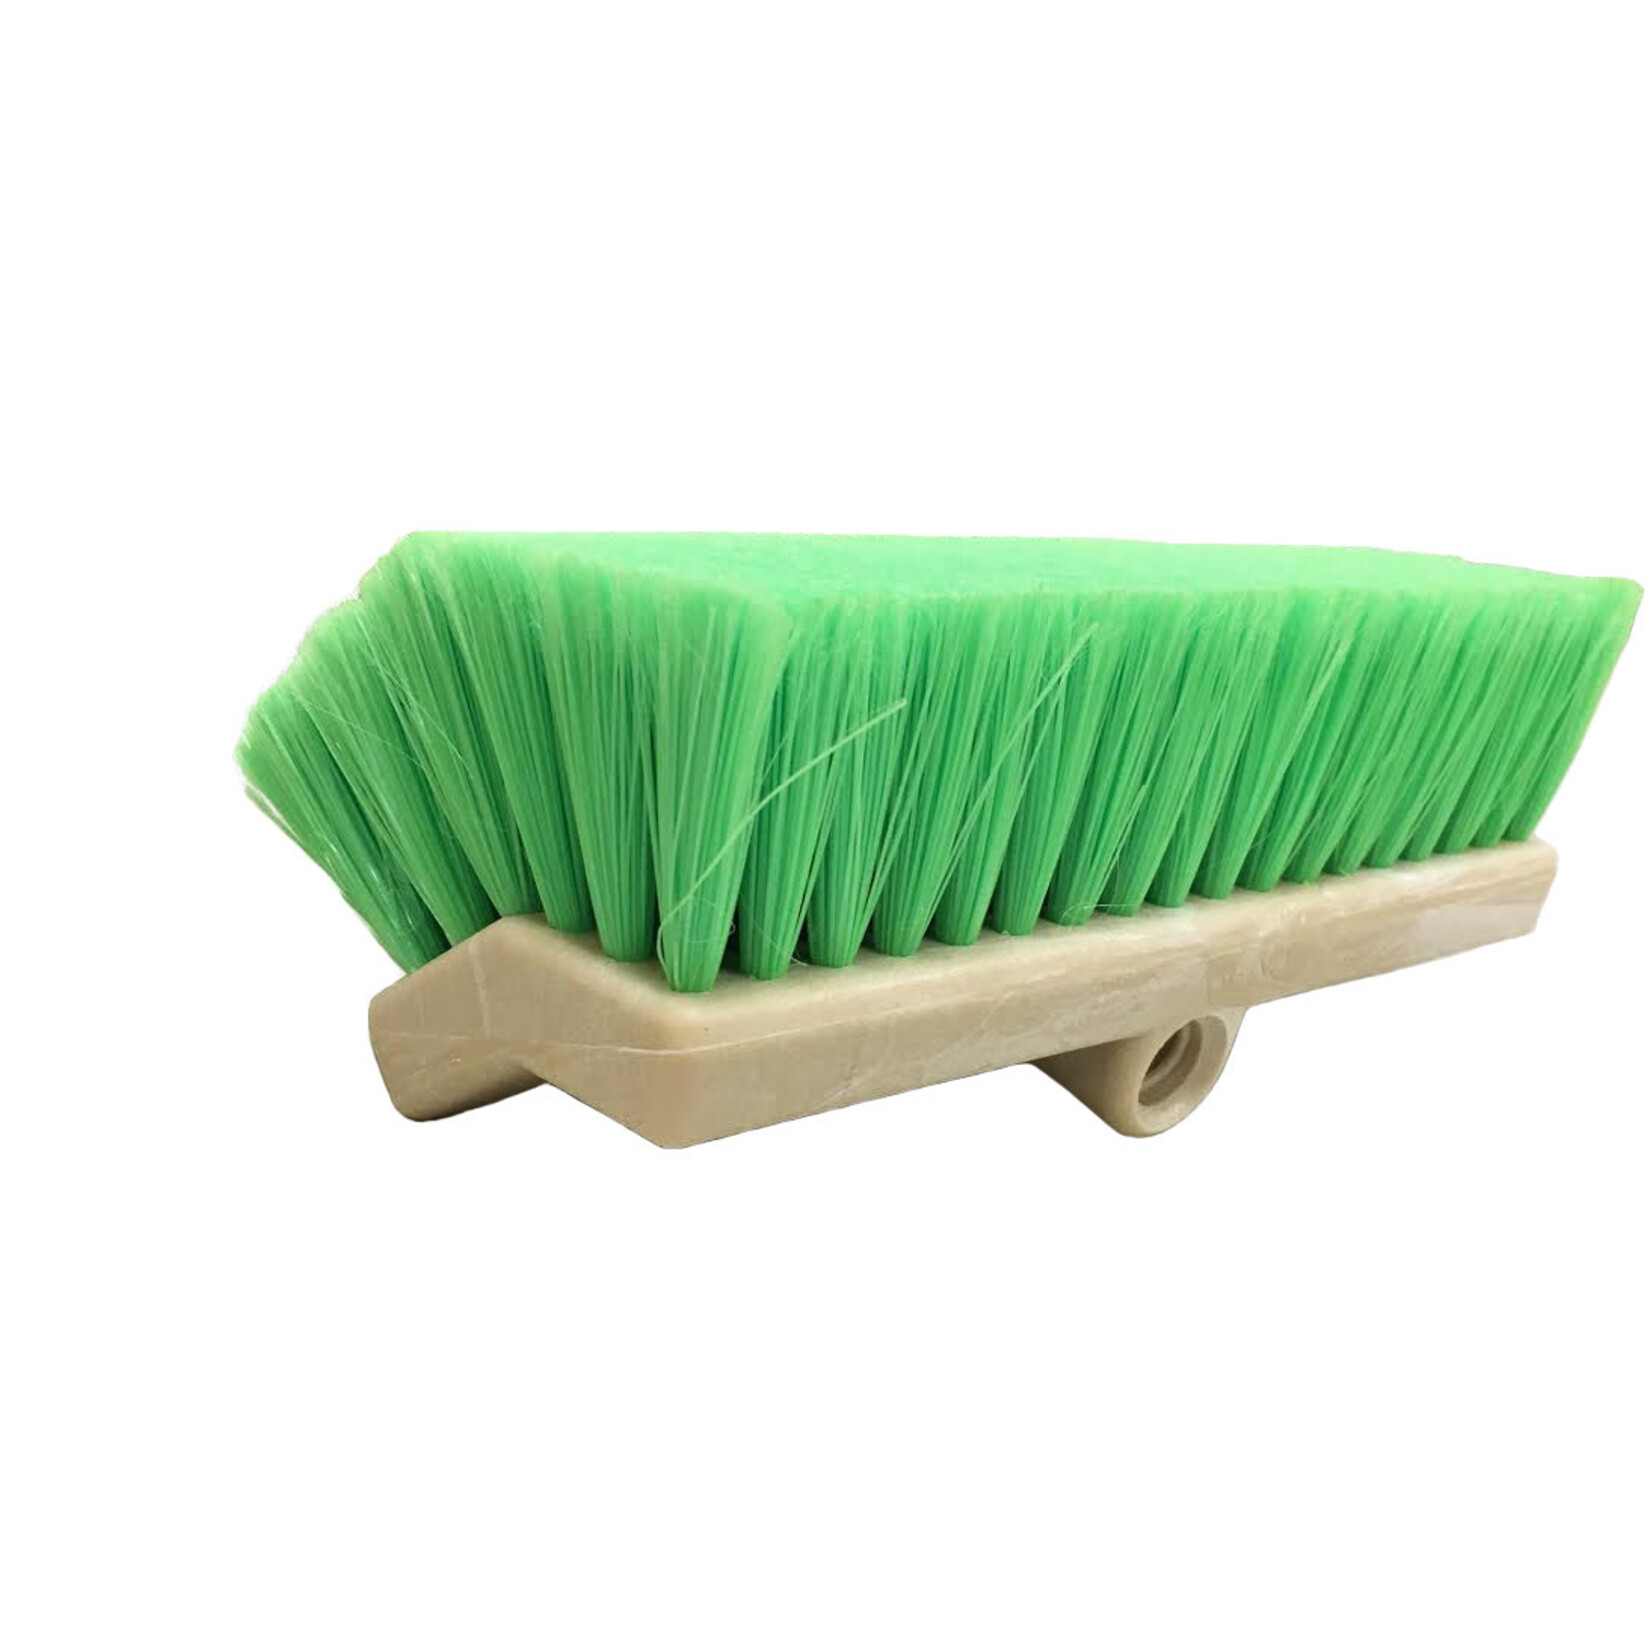 10" Bi-Level Green Nyltex Brush